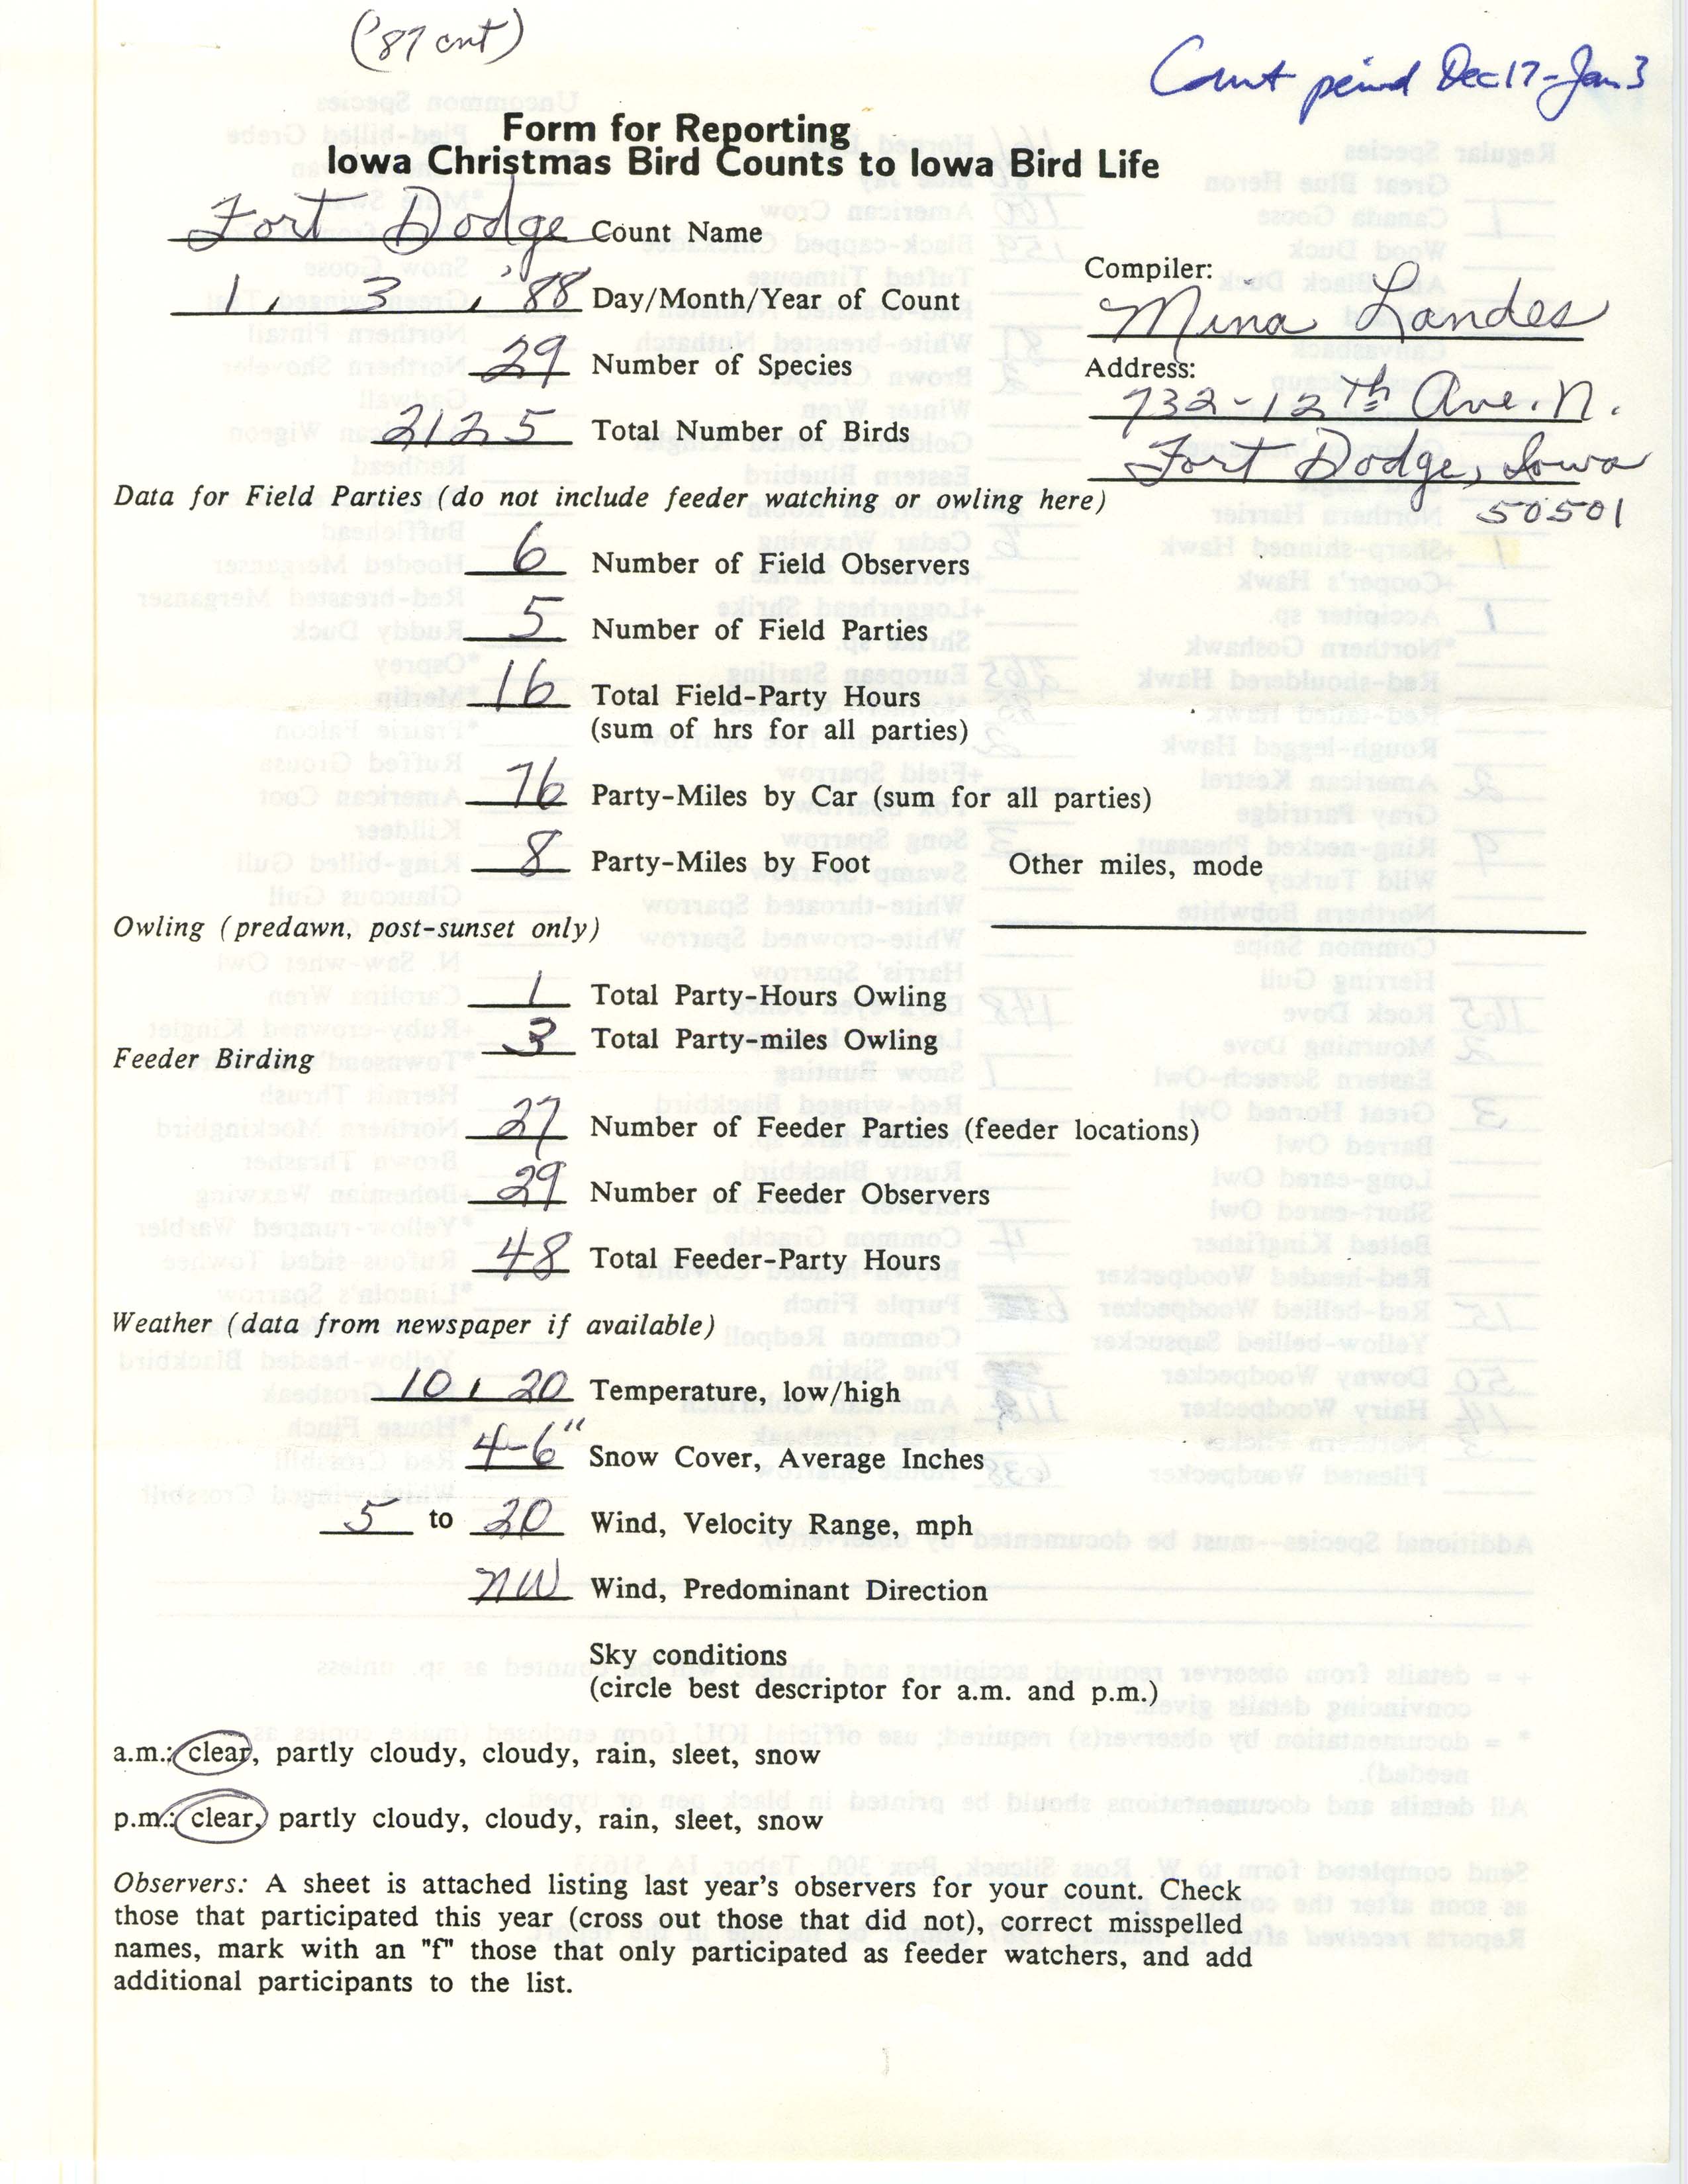 Form for reporting Iowa Christmas bird counts to Iowa Bird Life, Mina Landes, January 3, 1988